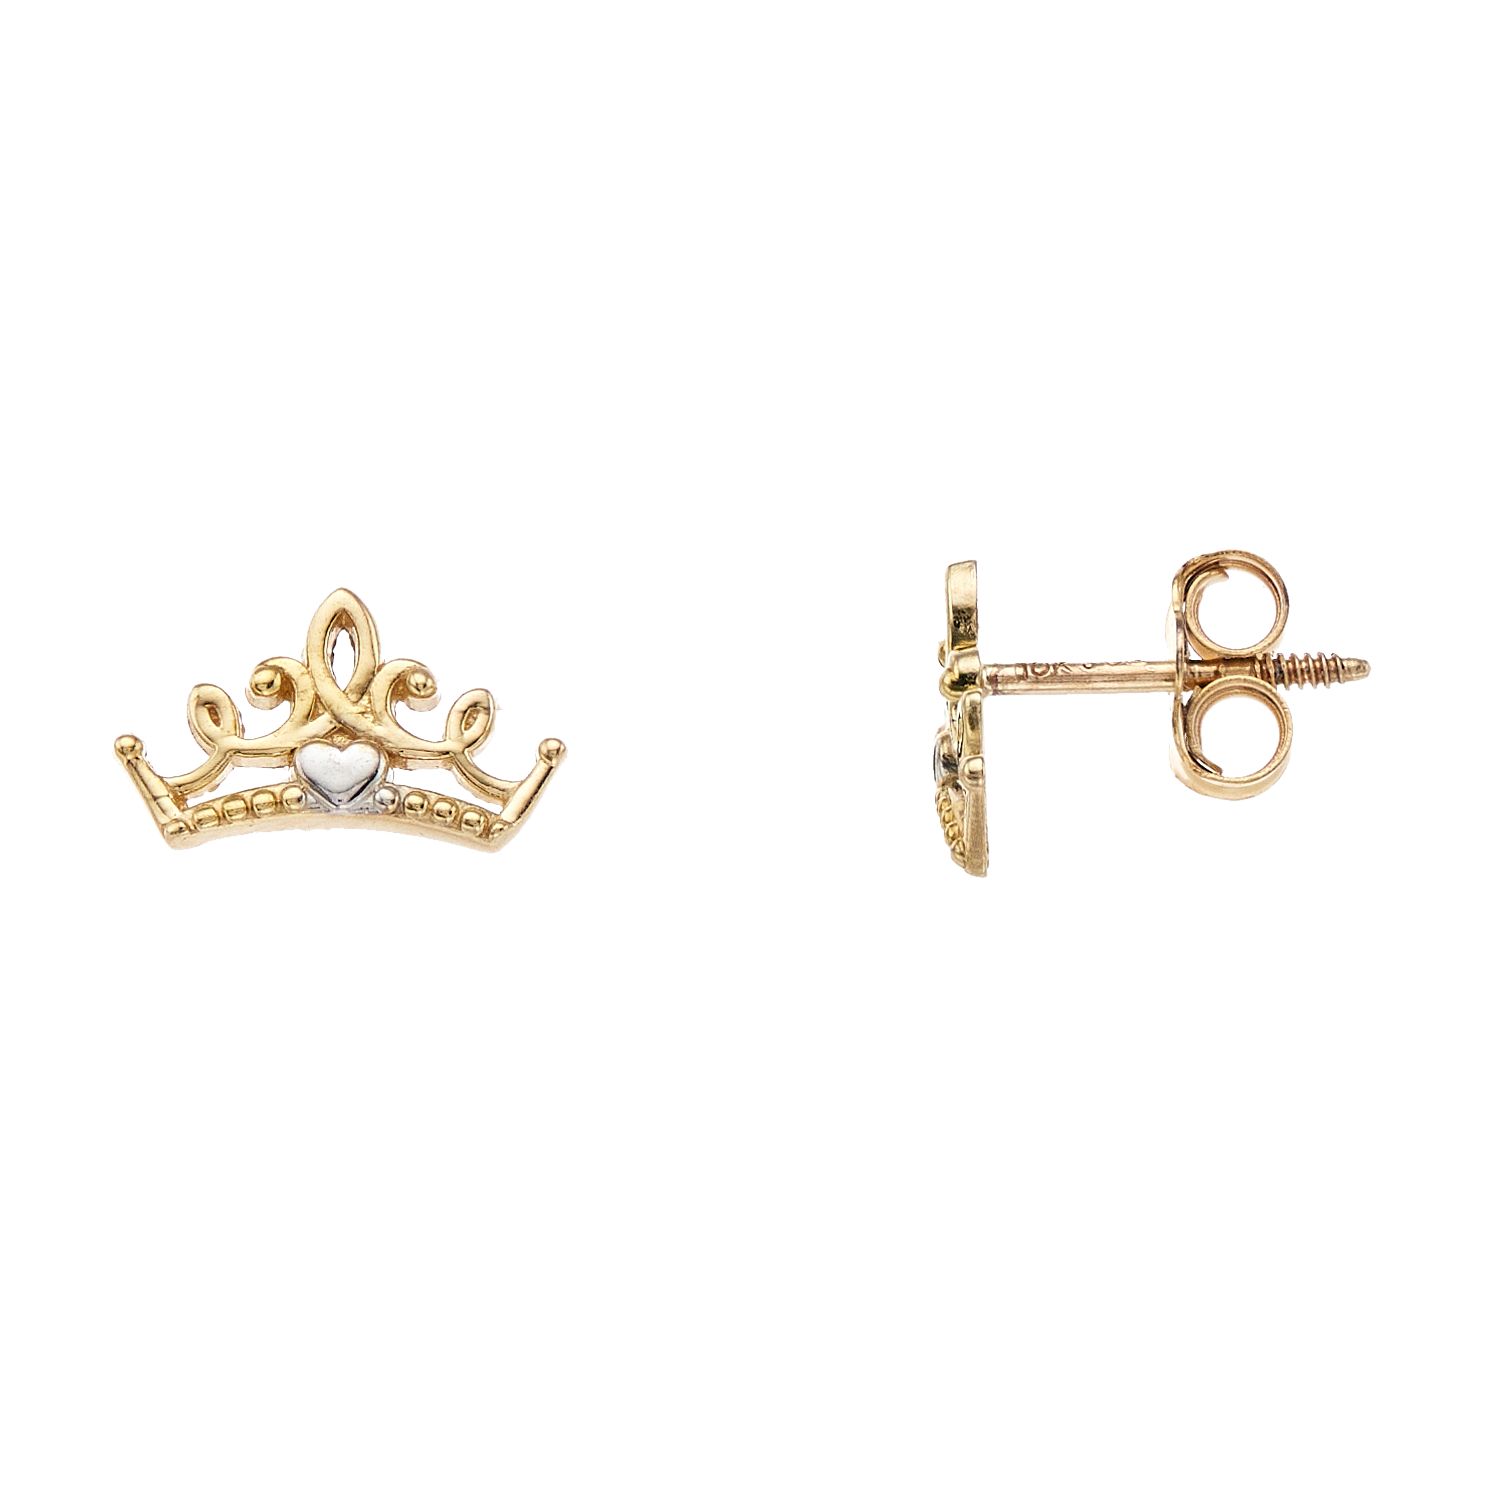 Image for Disney 10k Gold Crown Stud Earrings at Kohl's.